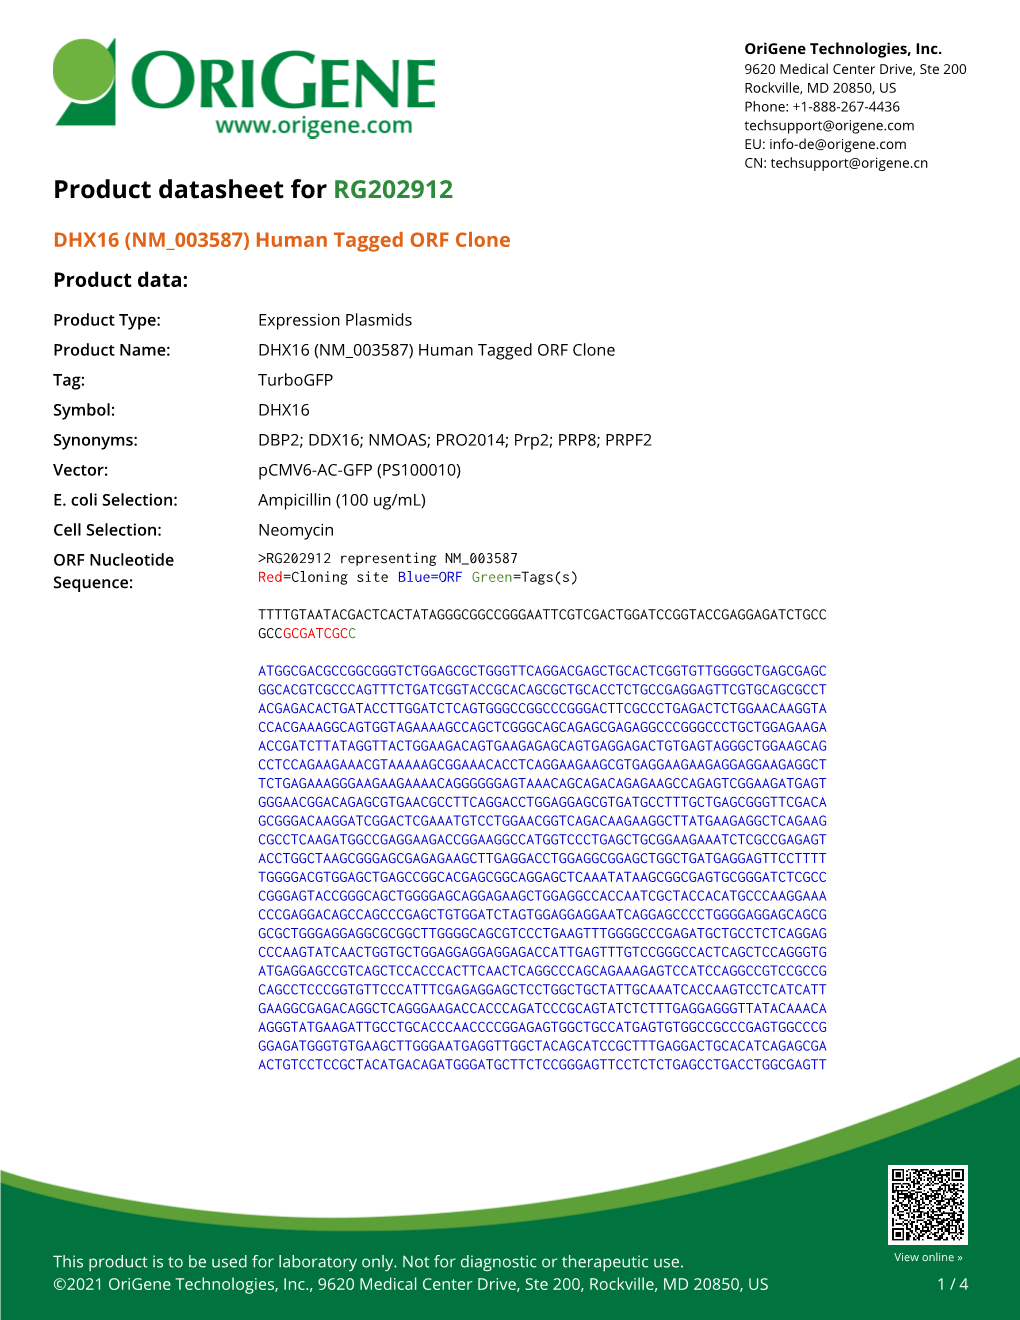 DHX16 (NM 003587) Human Tagged ORF Clone – RG202912 | Origene